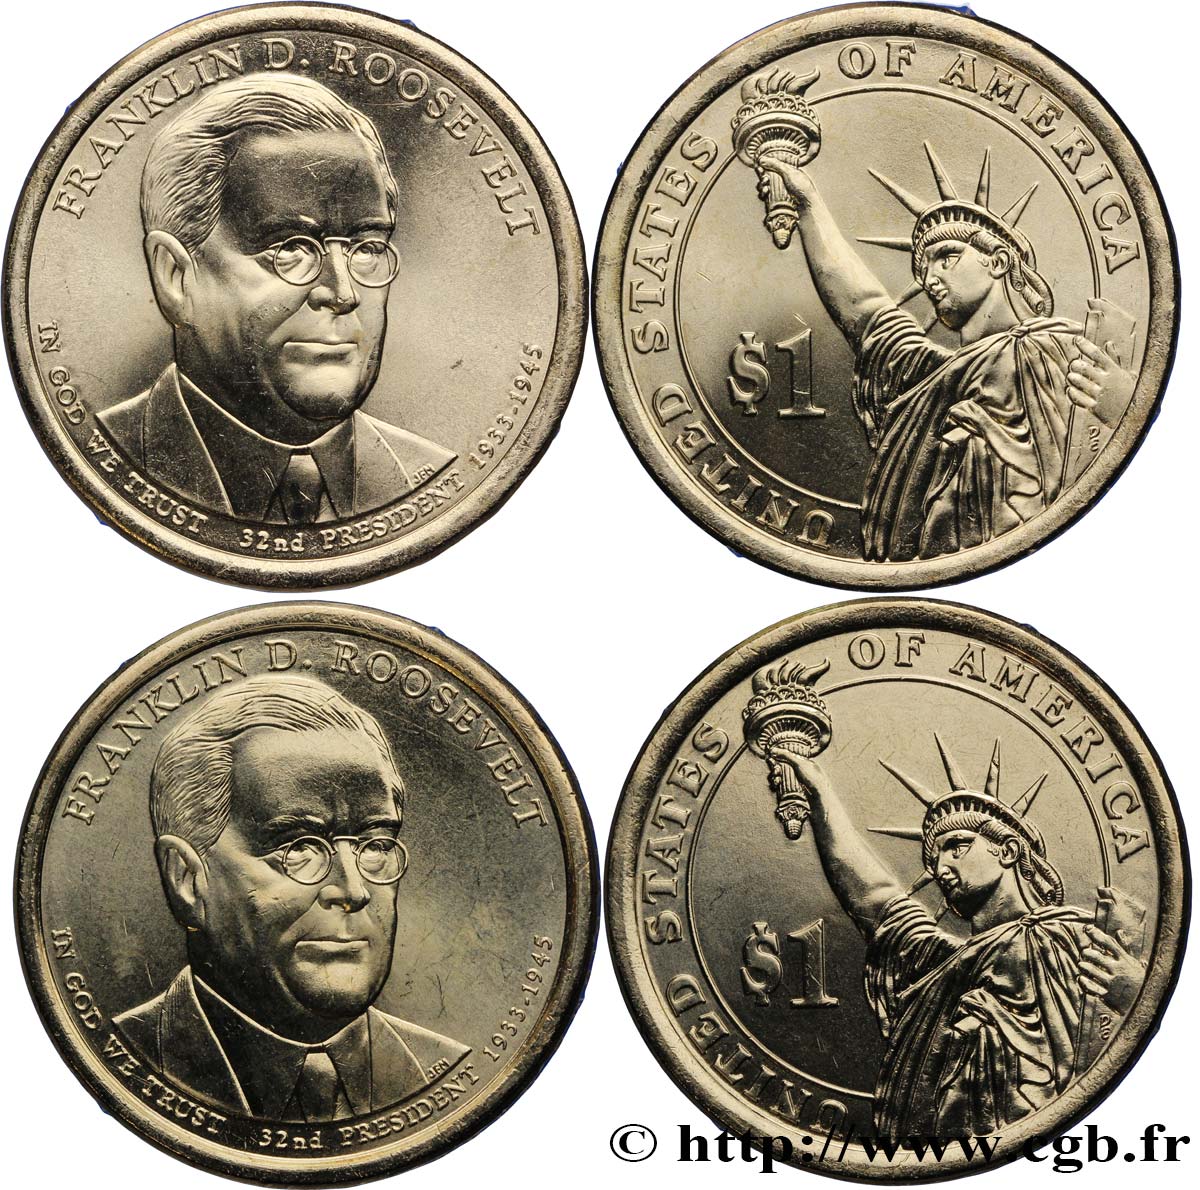 STATI UNITI D AMERICA Lot de deux monnaies 1 Dollar Franklin Delano Roosevelt 2014 Denver FDC 